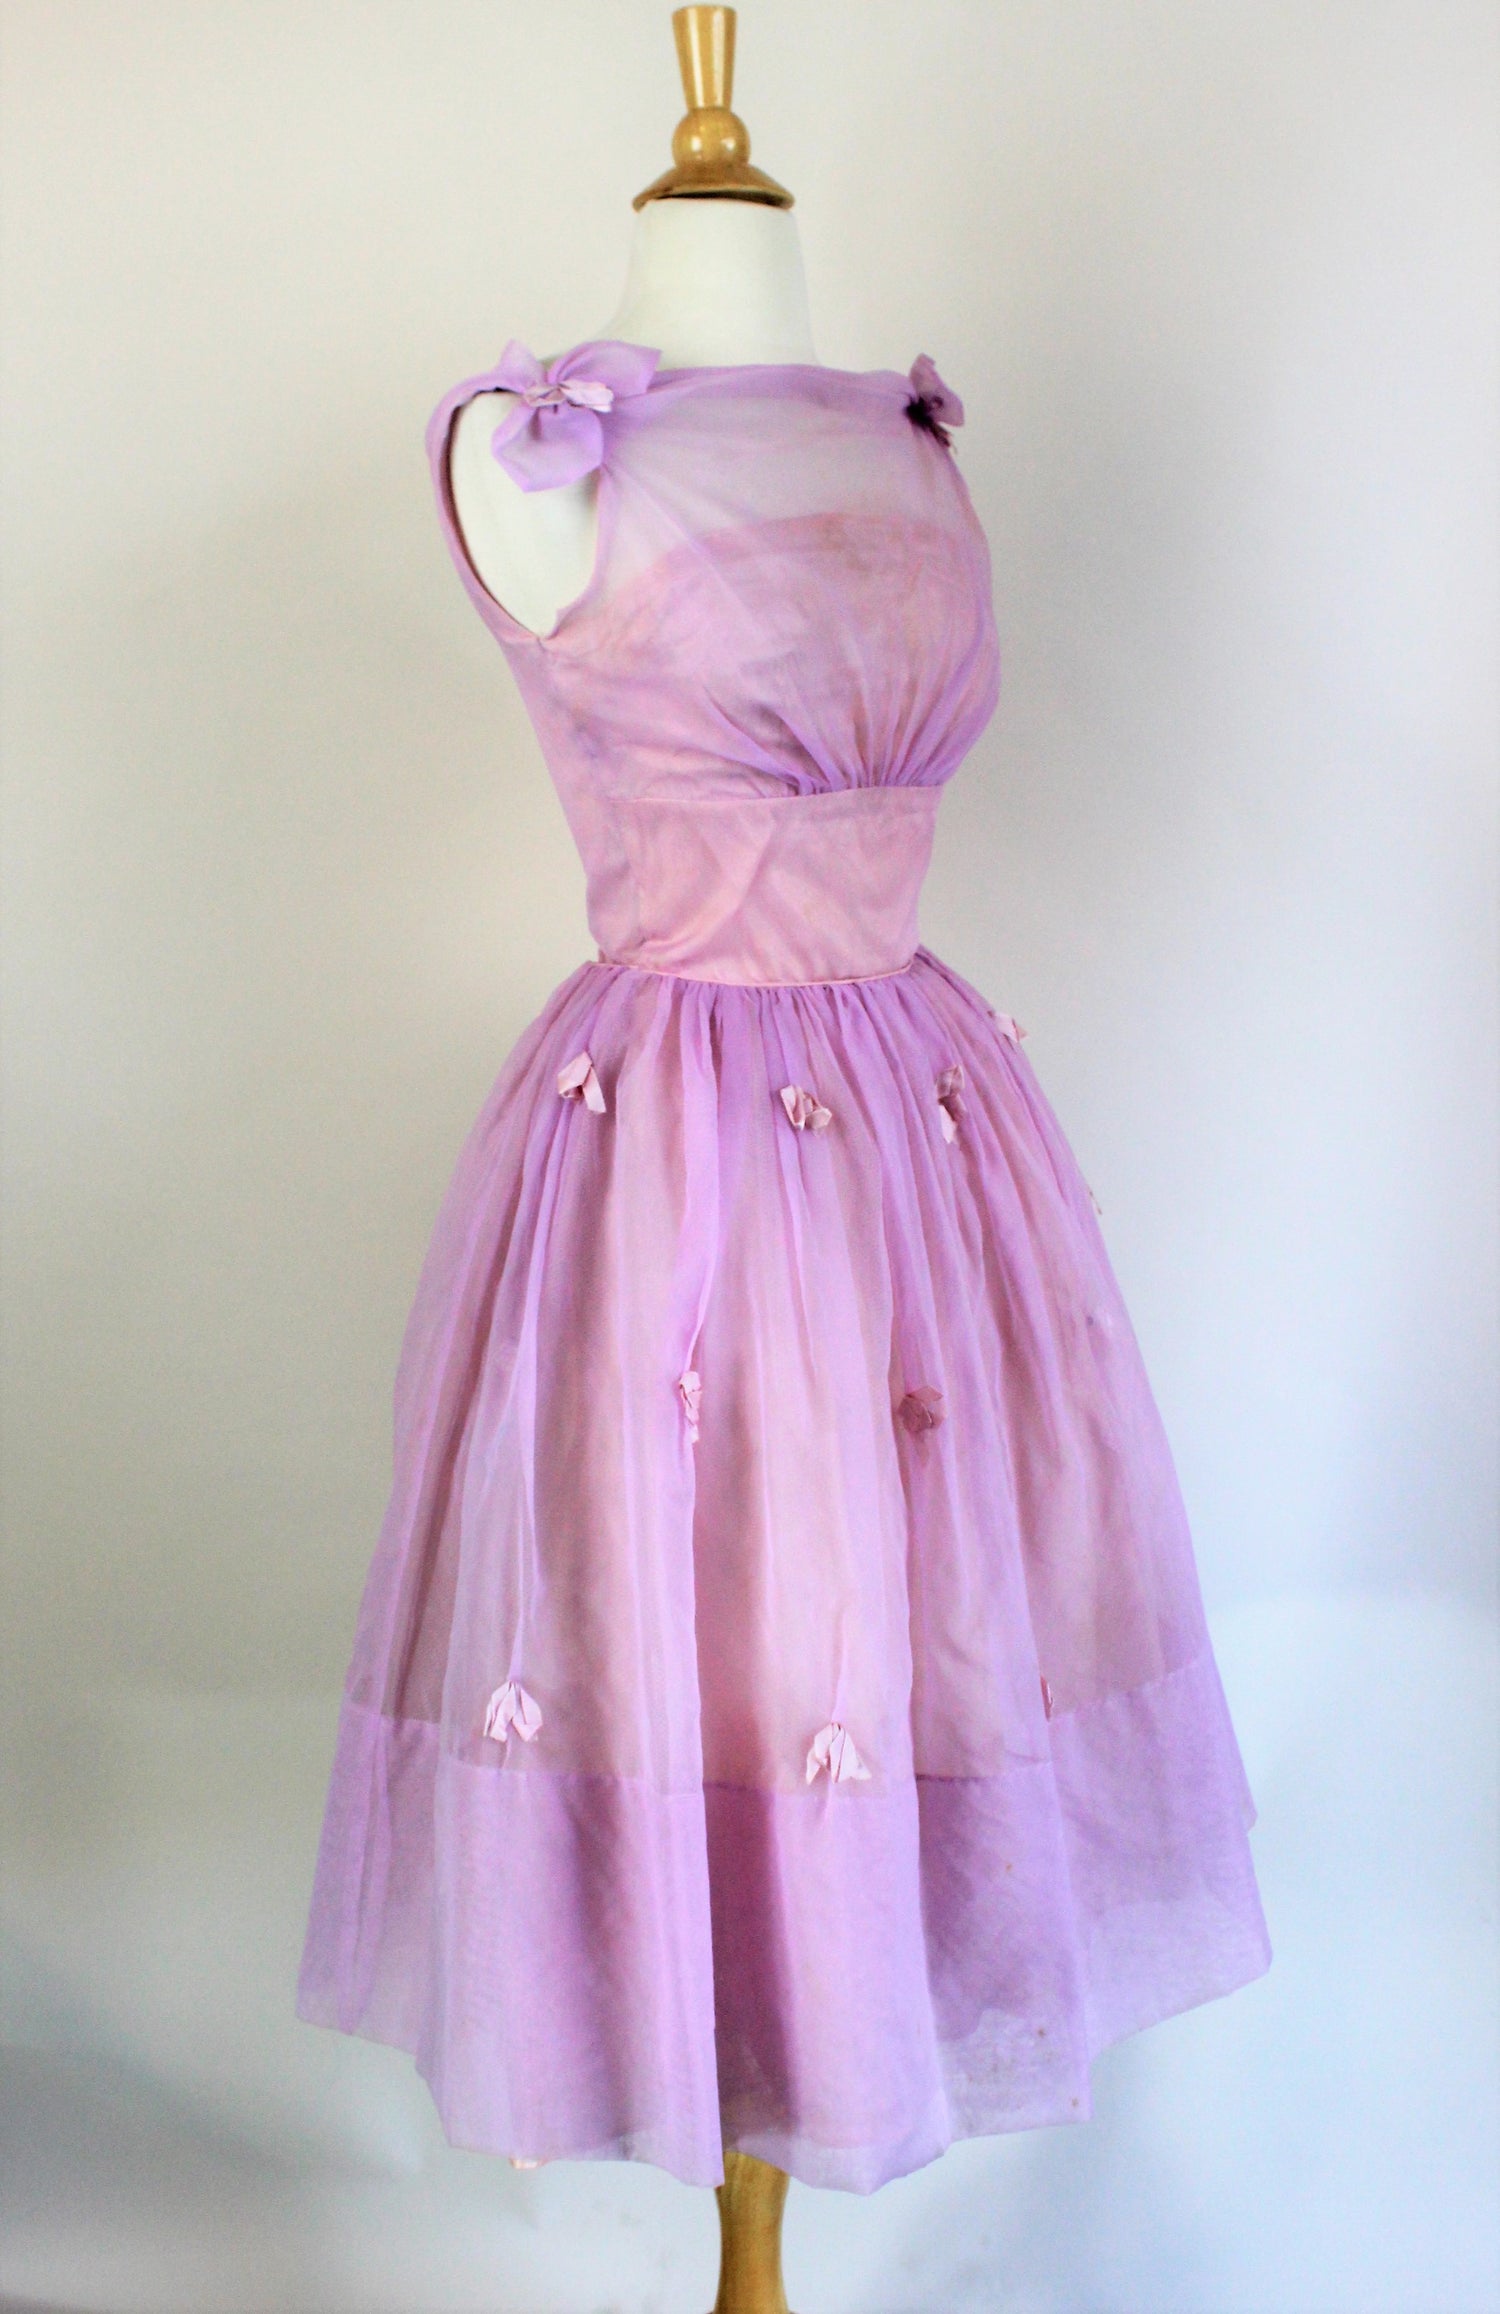 Vintage 1960s Fairytale Dream Dress in Lavender Pink, by Aldens